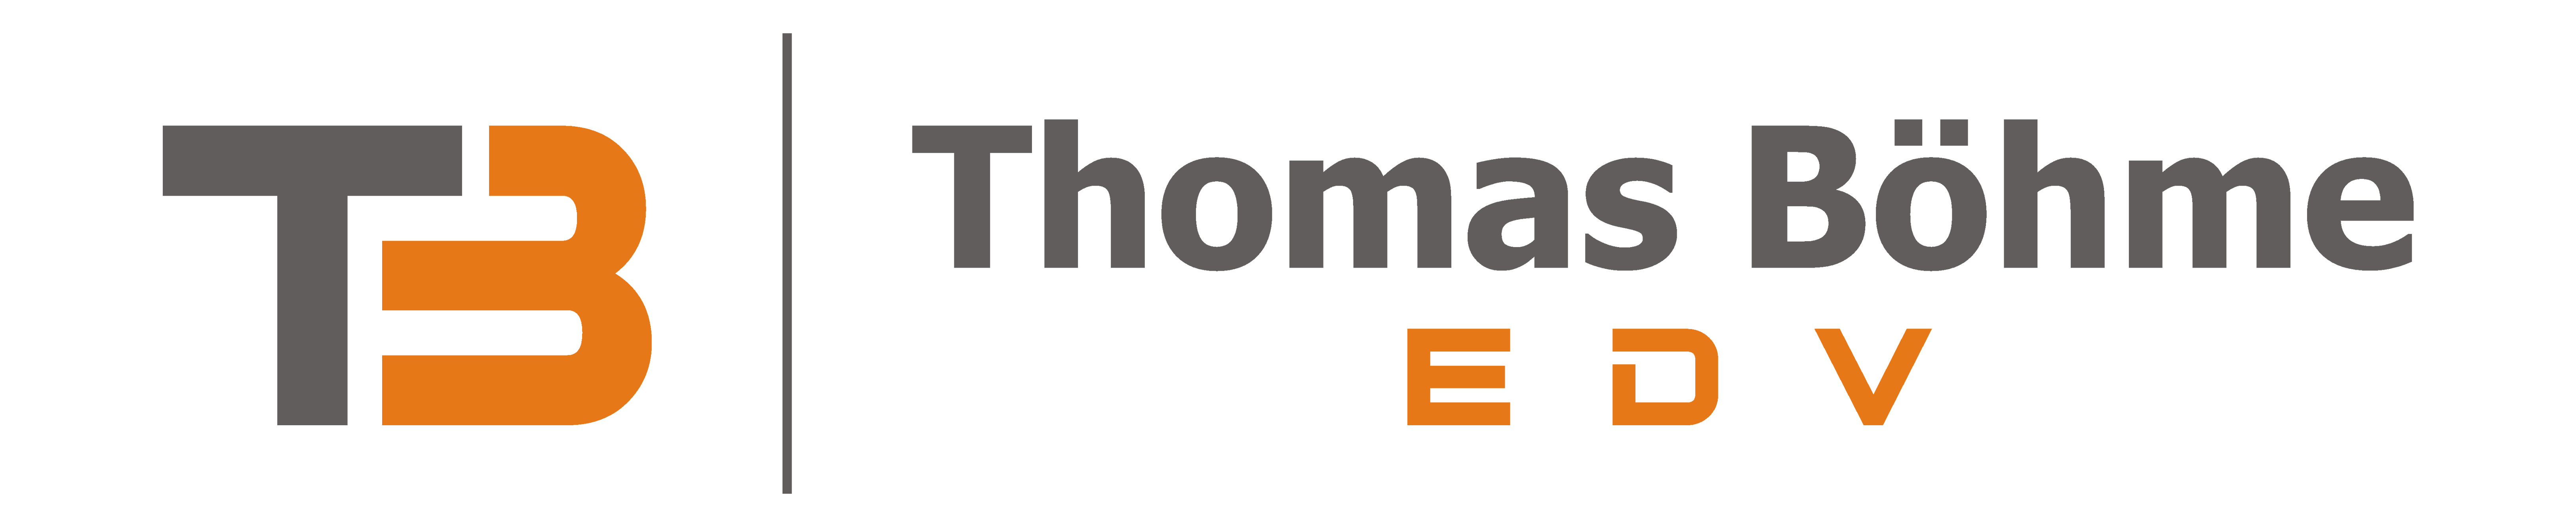 Logo Thomas Böhme EDV